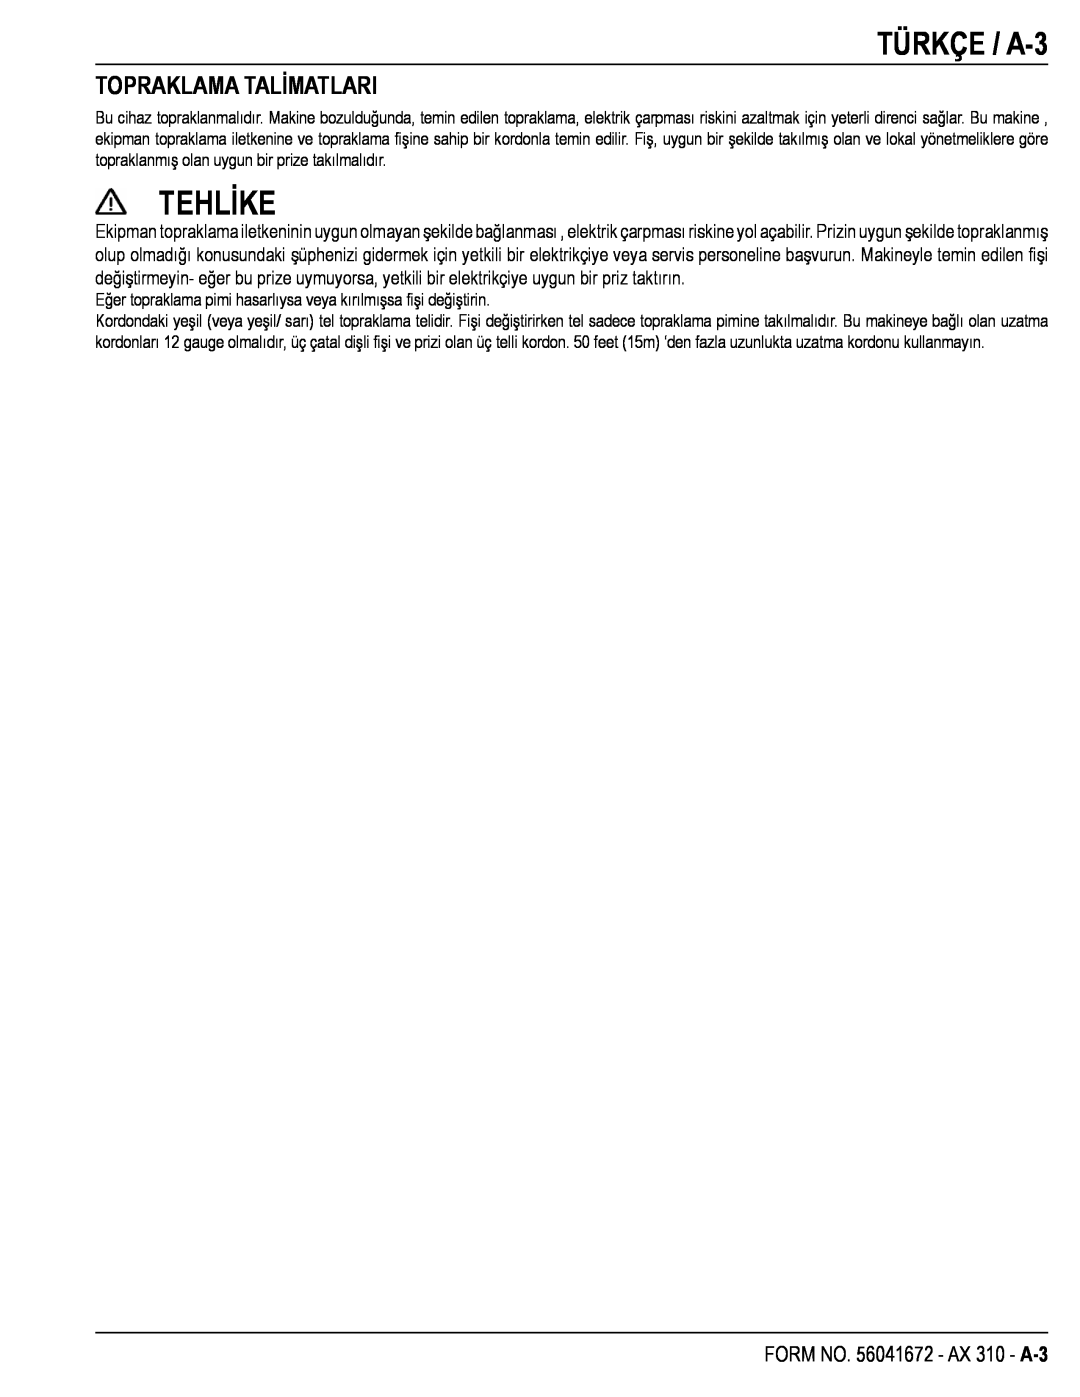 Nilfisk-Advance America manual Tehlike, TÜRKÇE / A-3, Topraklama Talimatlari, FORM NO. 56041672 - AX 310 - A-3 